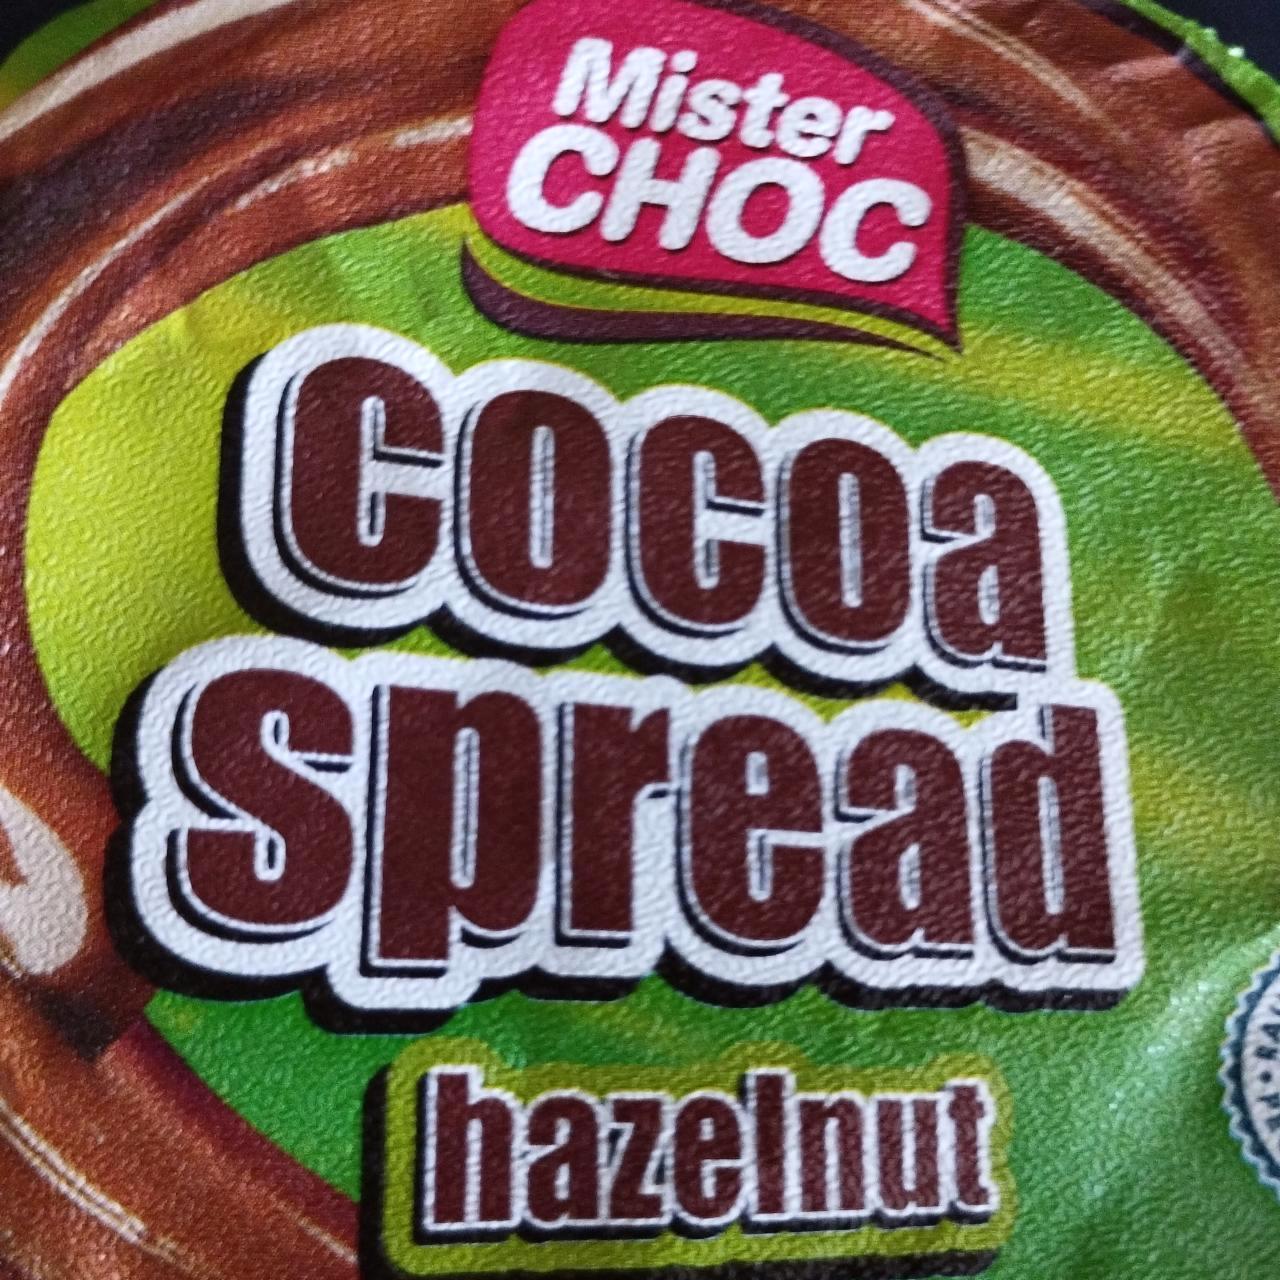 Képek - Cocoa spread hazelnut Mister Choc